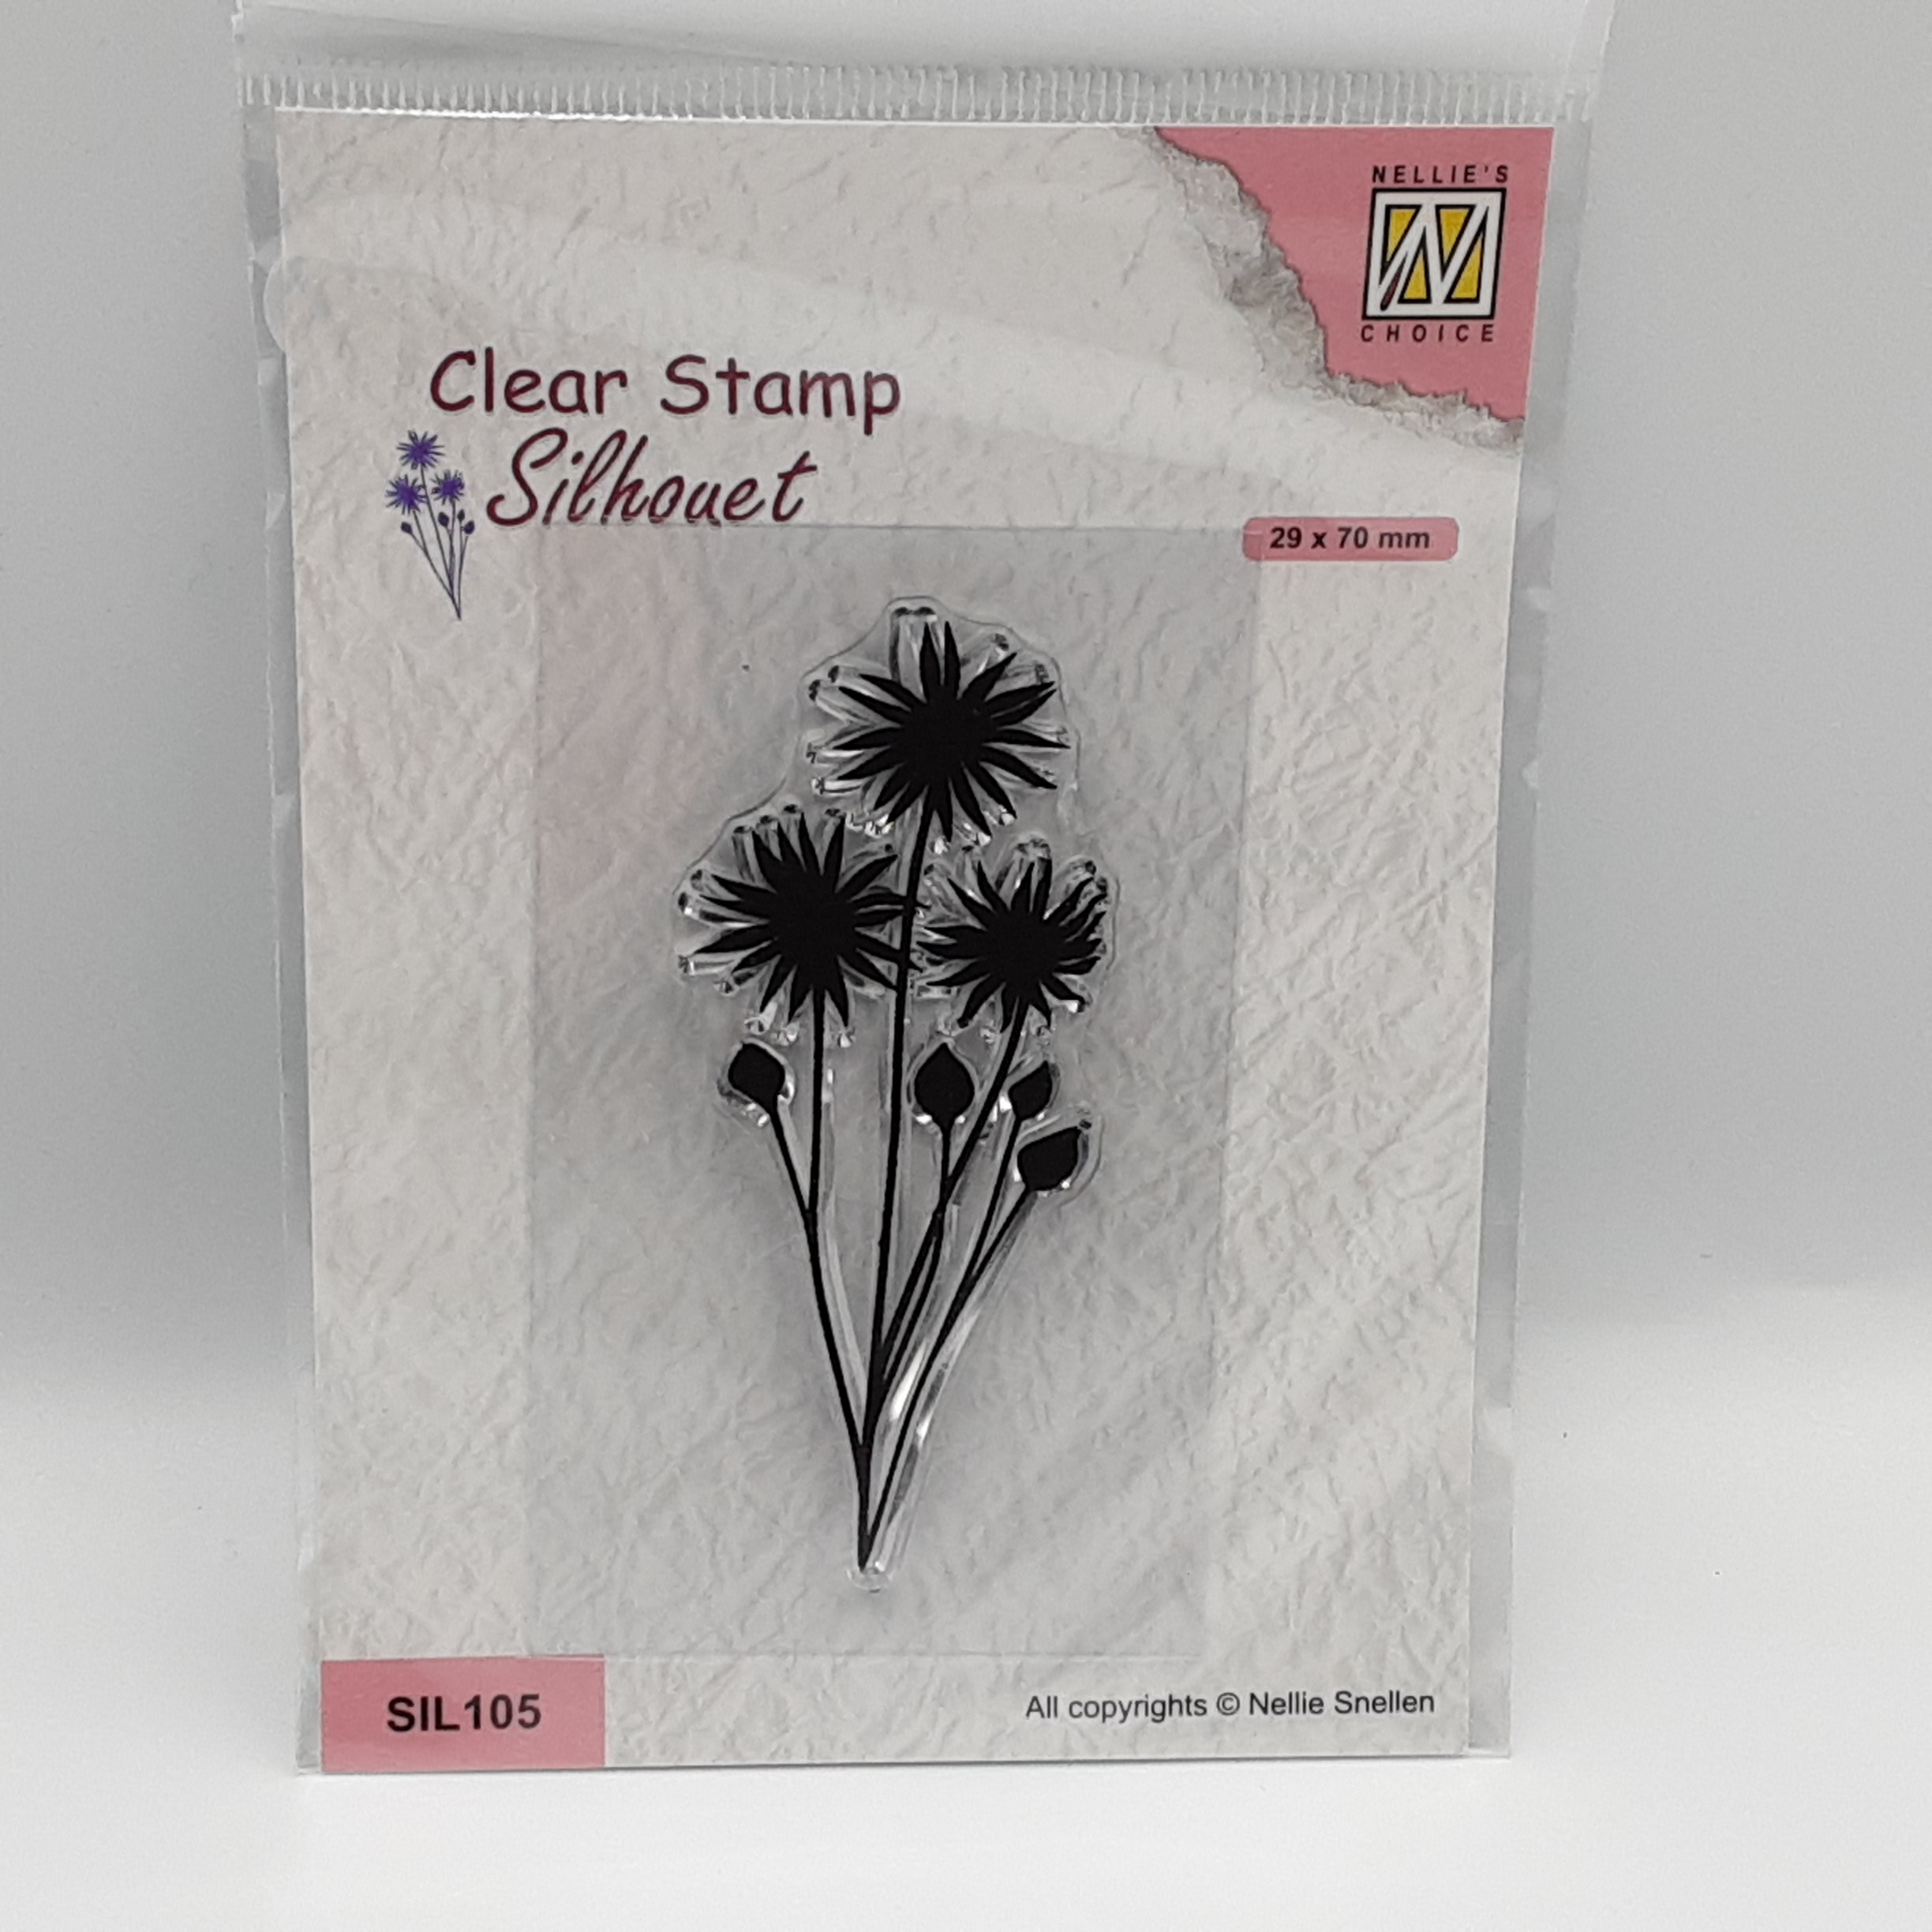 Silhouette bloemen 18 clear stamp